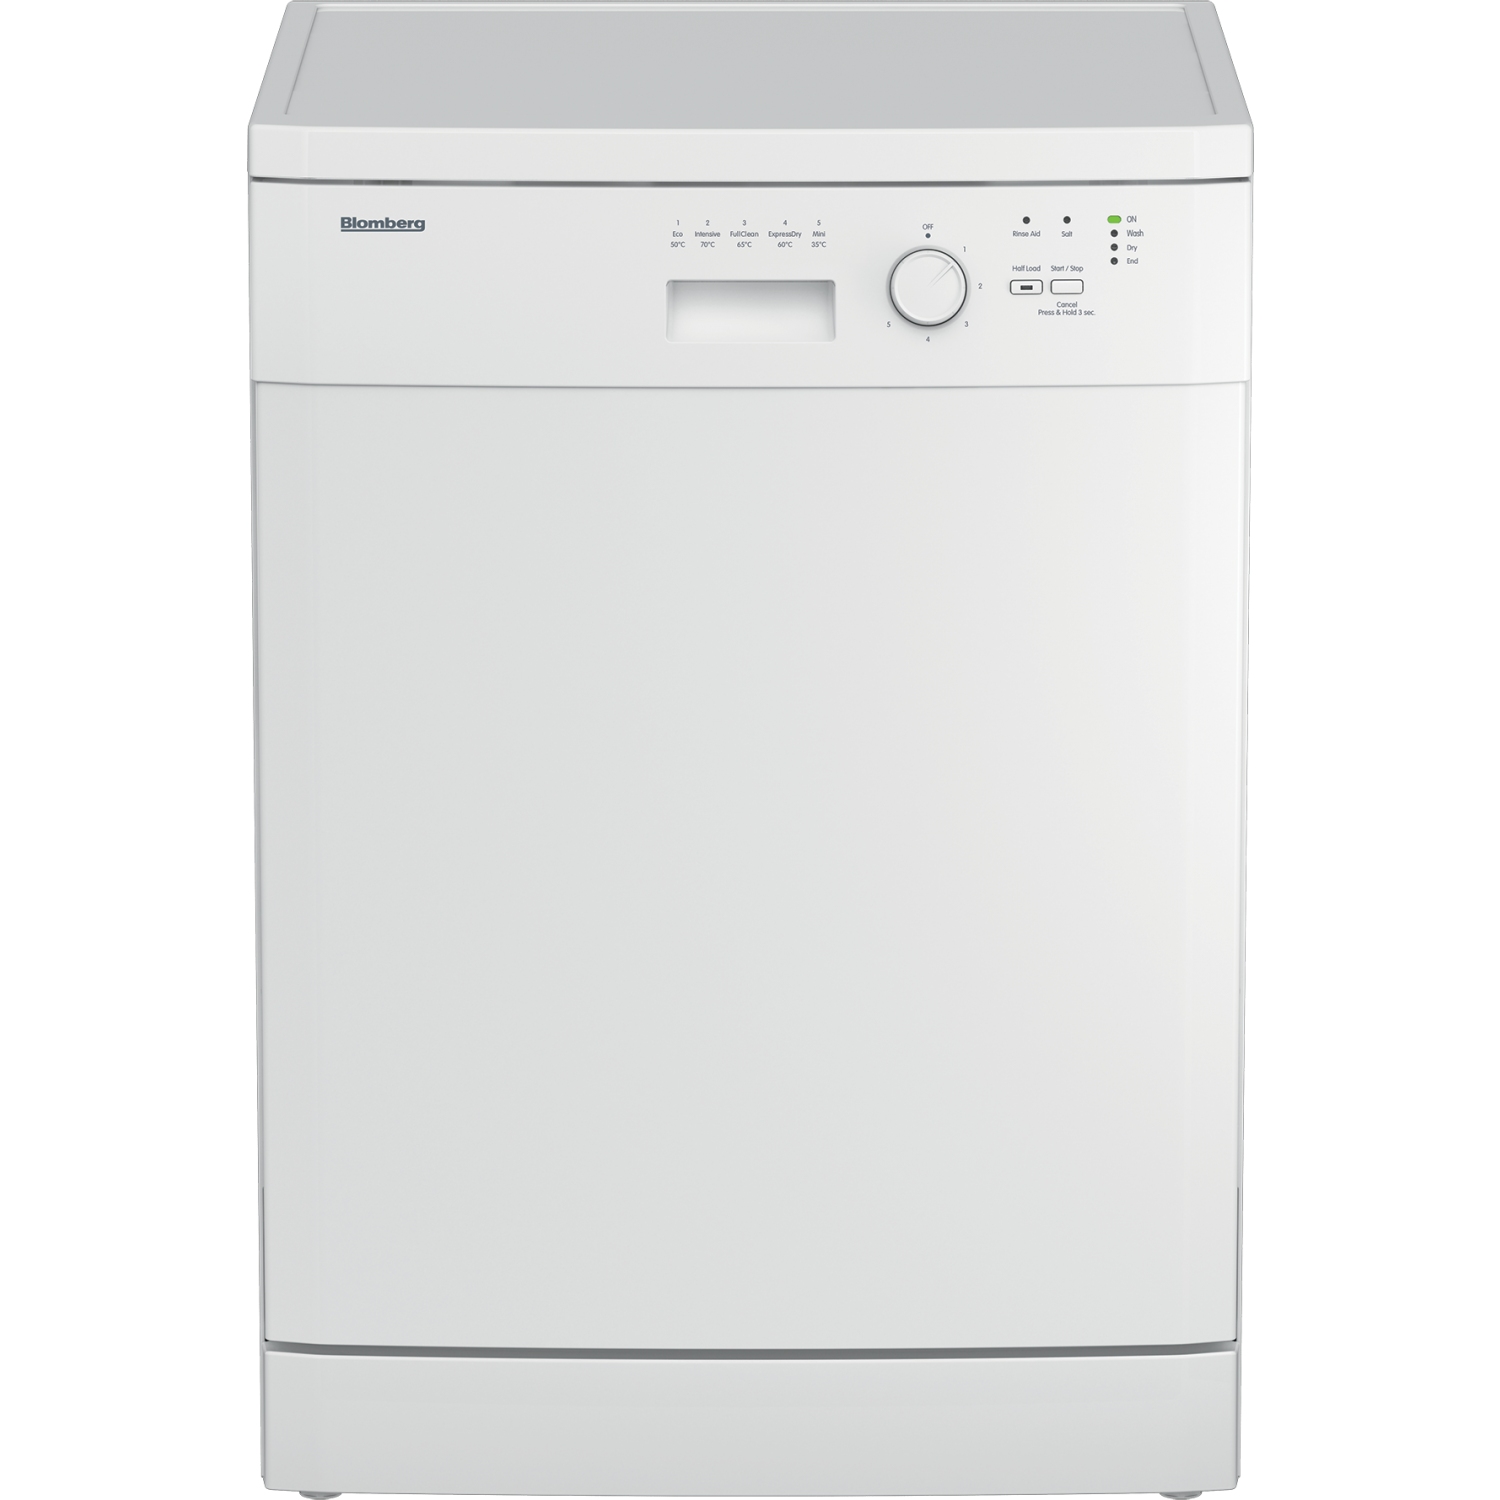 Blomberg LDF30211W Full Size Freestanding Dishwasher - White - 13 Place Settings - 4